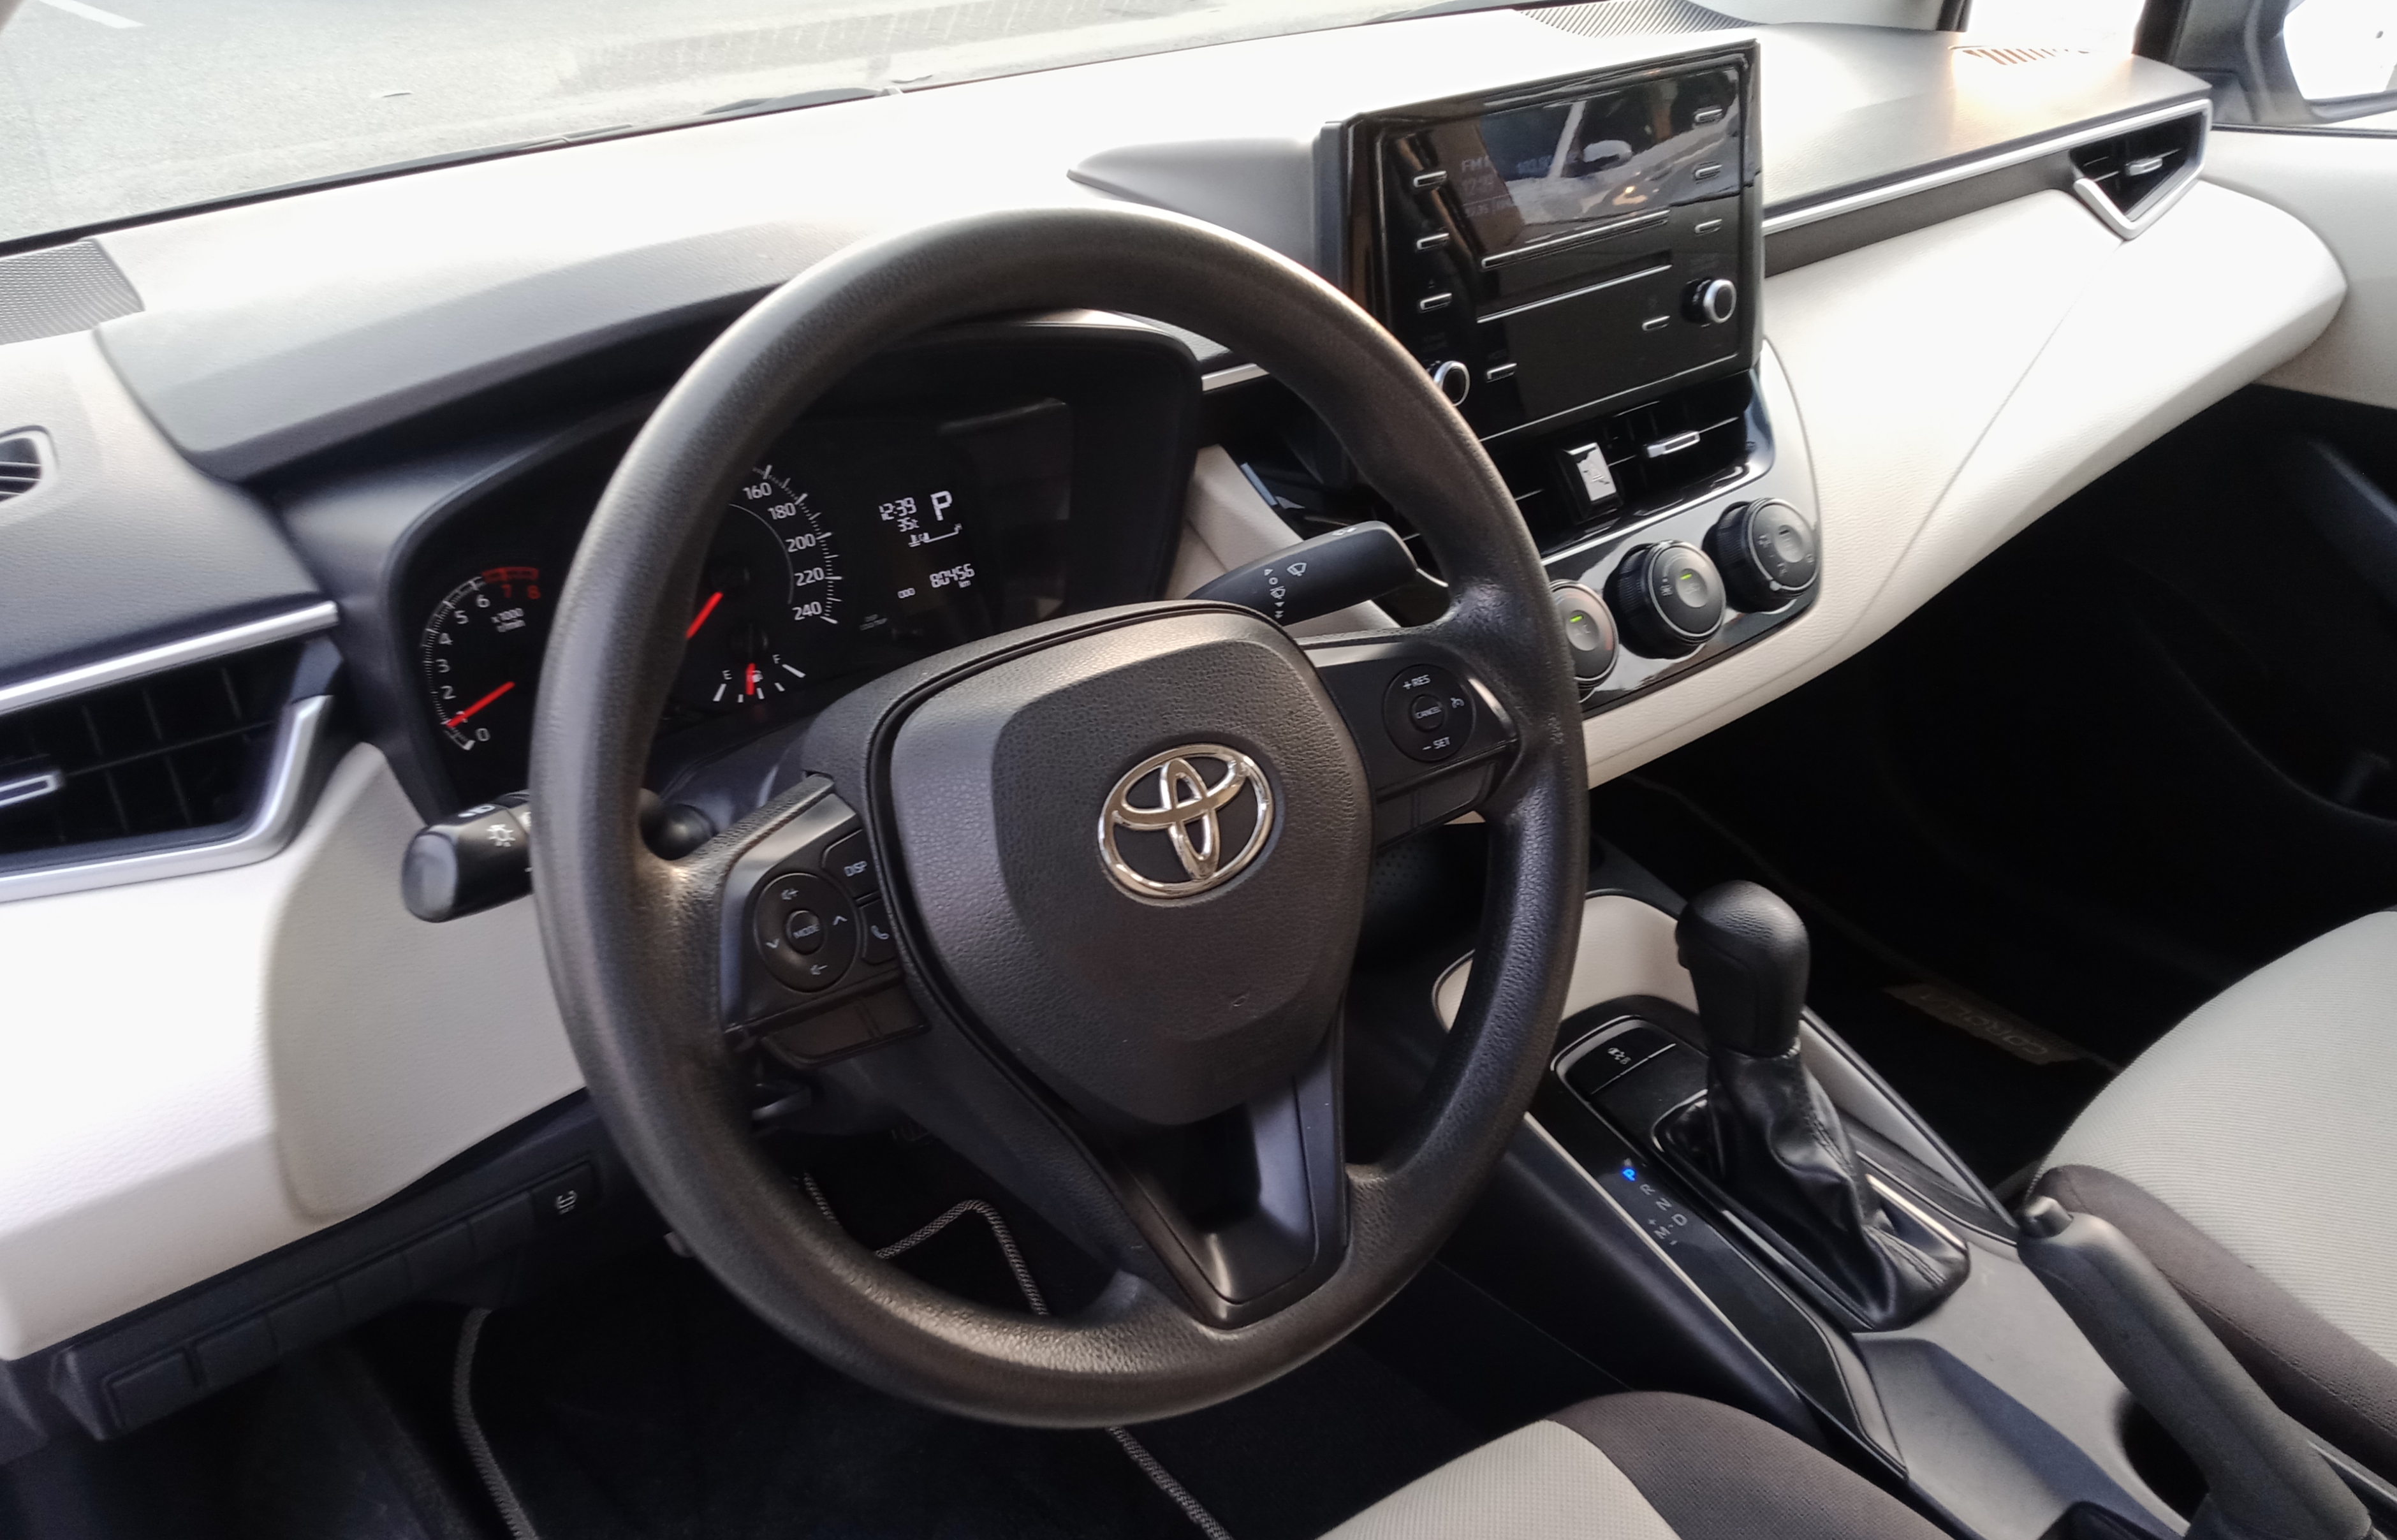 Toyota Corolla V4 1.6L Model 2020-pic_5